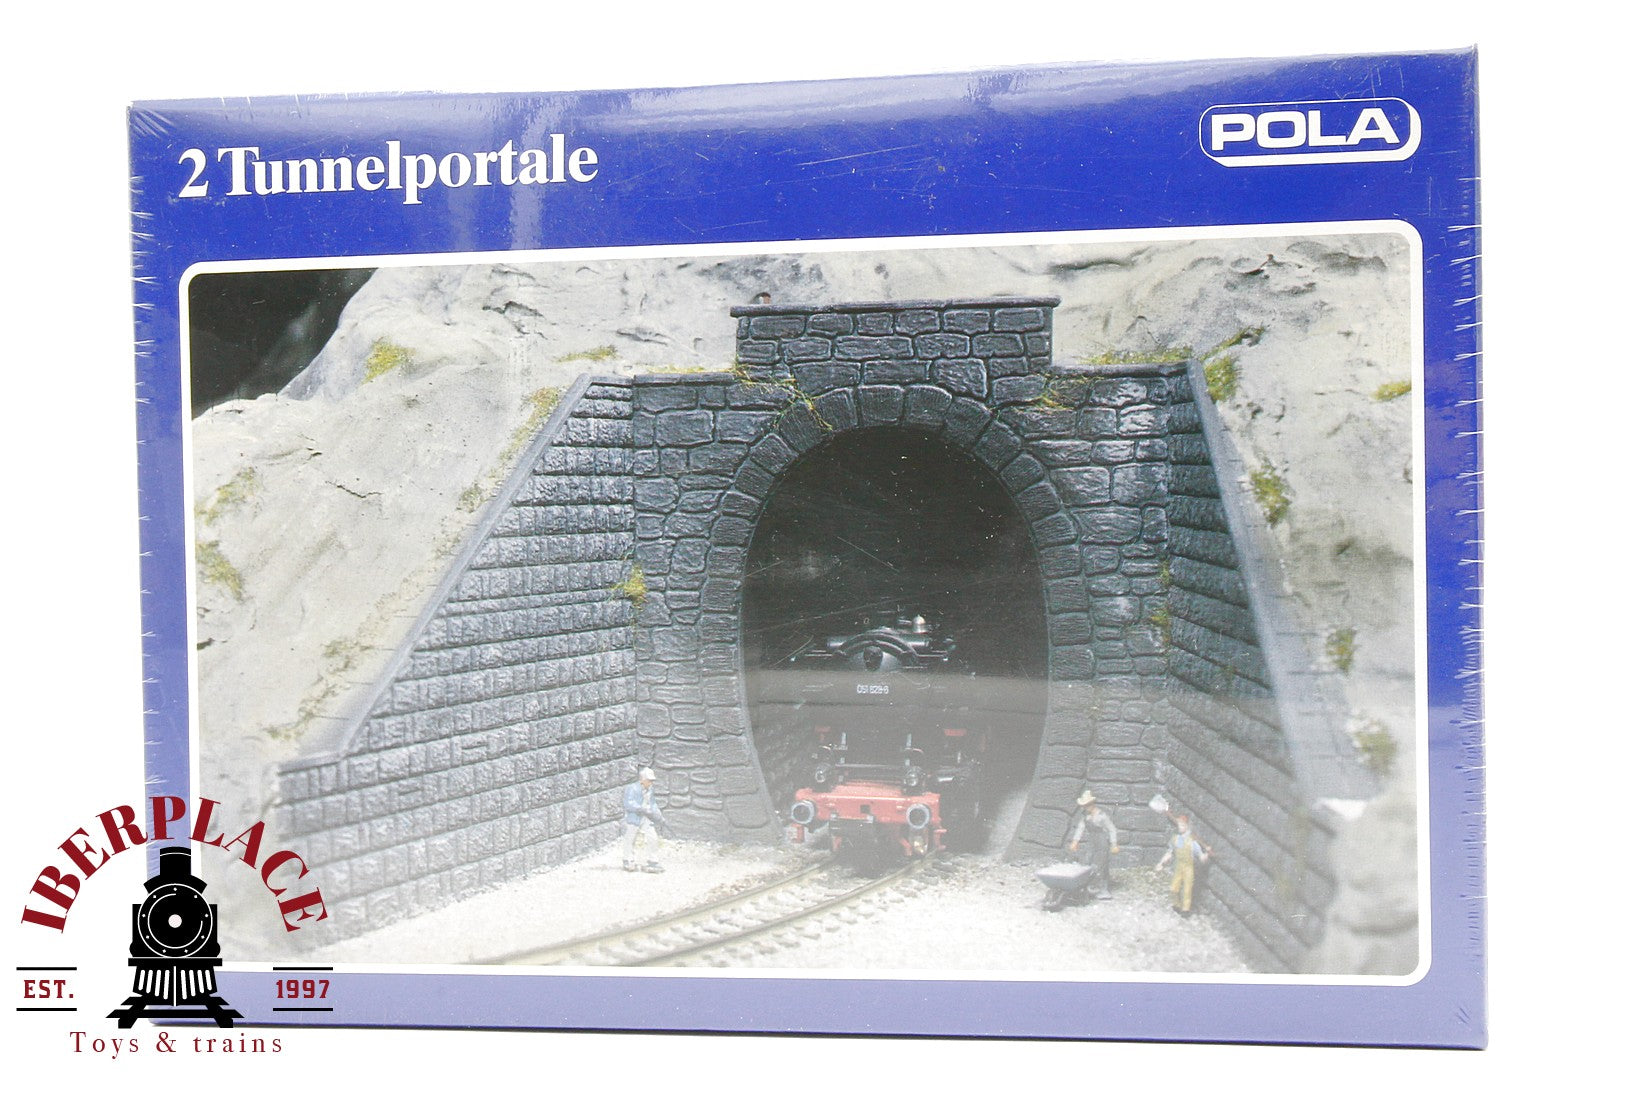 1:87 POLA 586 Tunnelportale 400x30x120mm H0 escala ho 00